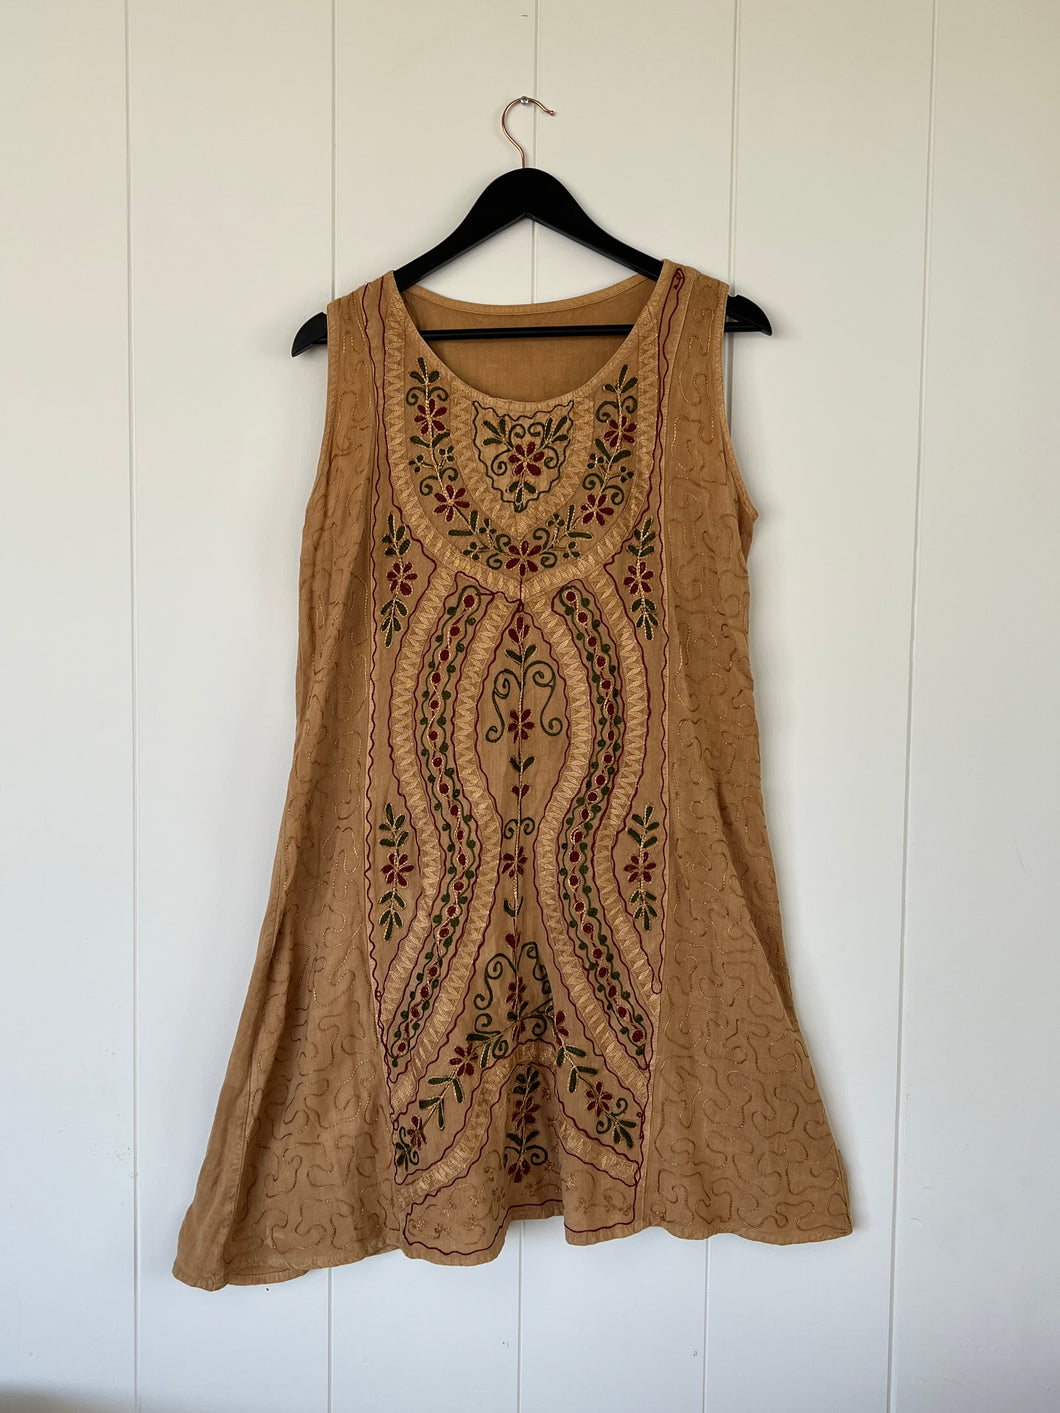 Vintage 60s/70s embroidered dress